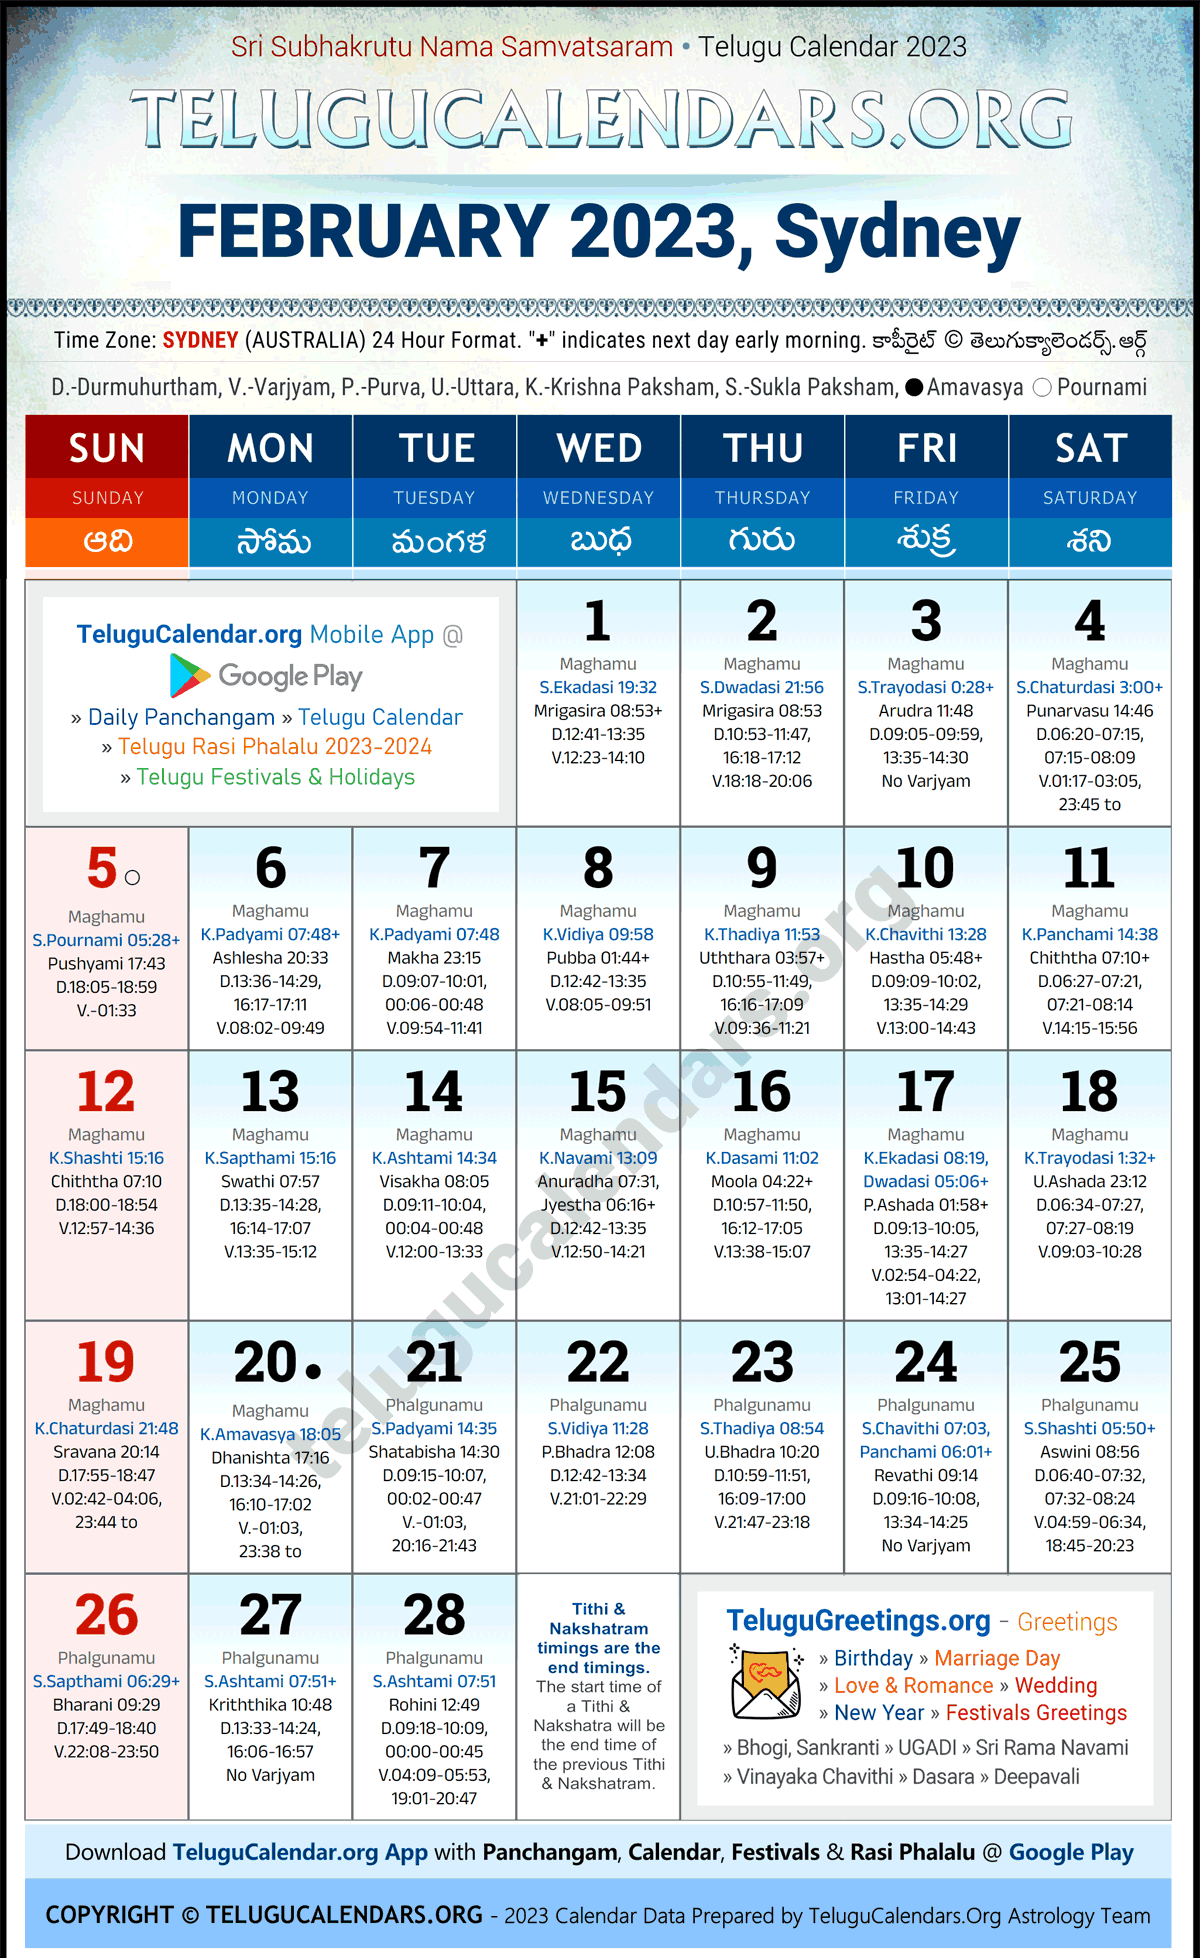 Telugu Calendar 2023 February Festivals for Sydney